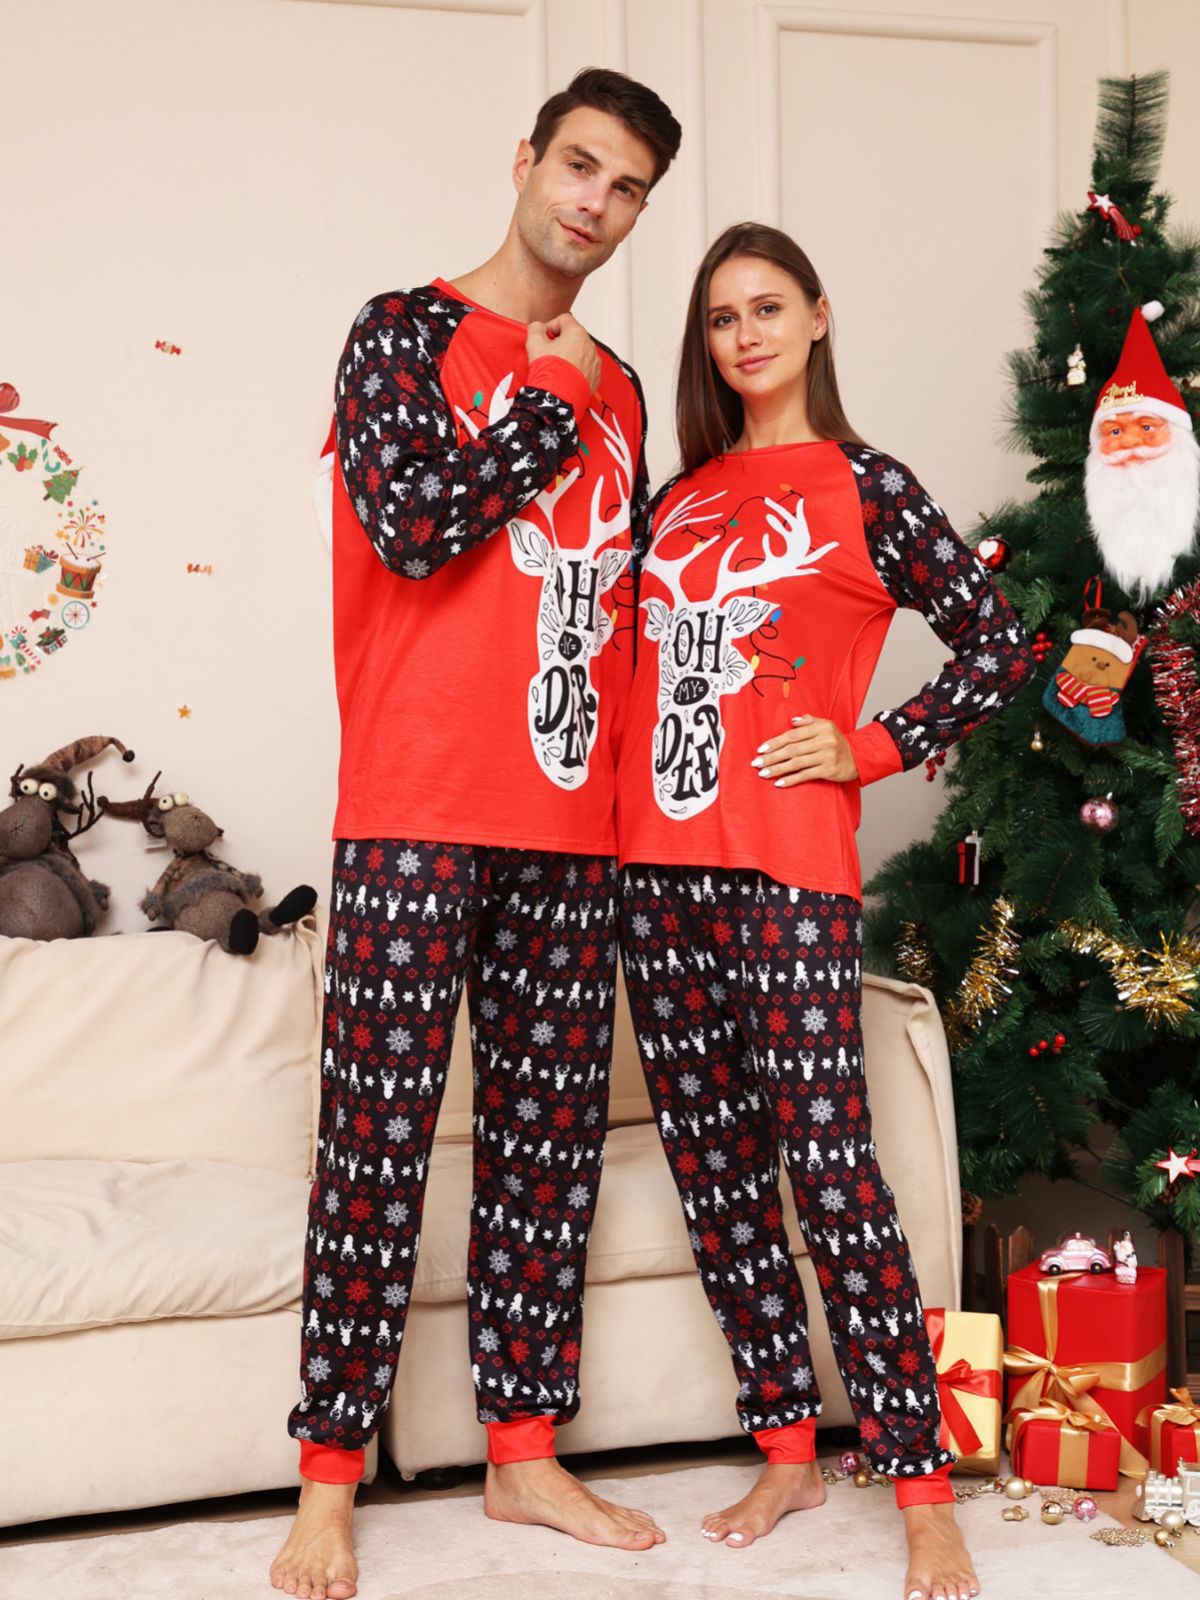 BamBam Letter Snowflake Deer Printed Christmas Parent-Child Pajamas Outfit Home Clothes - BamBam